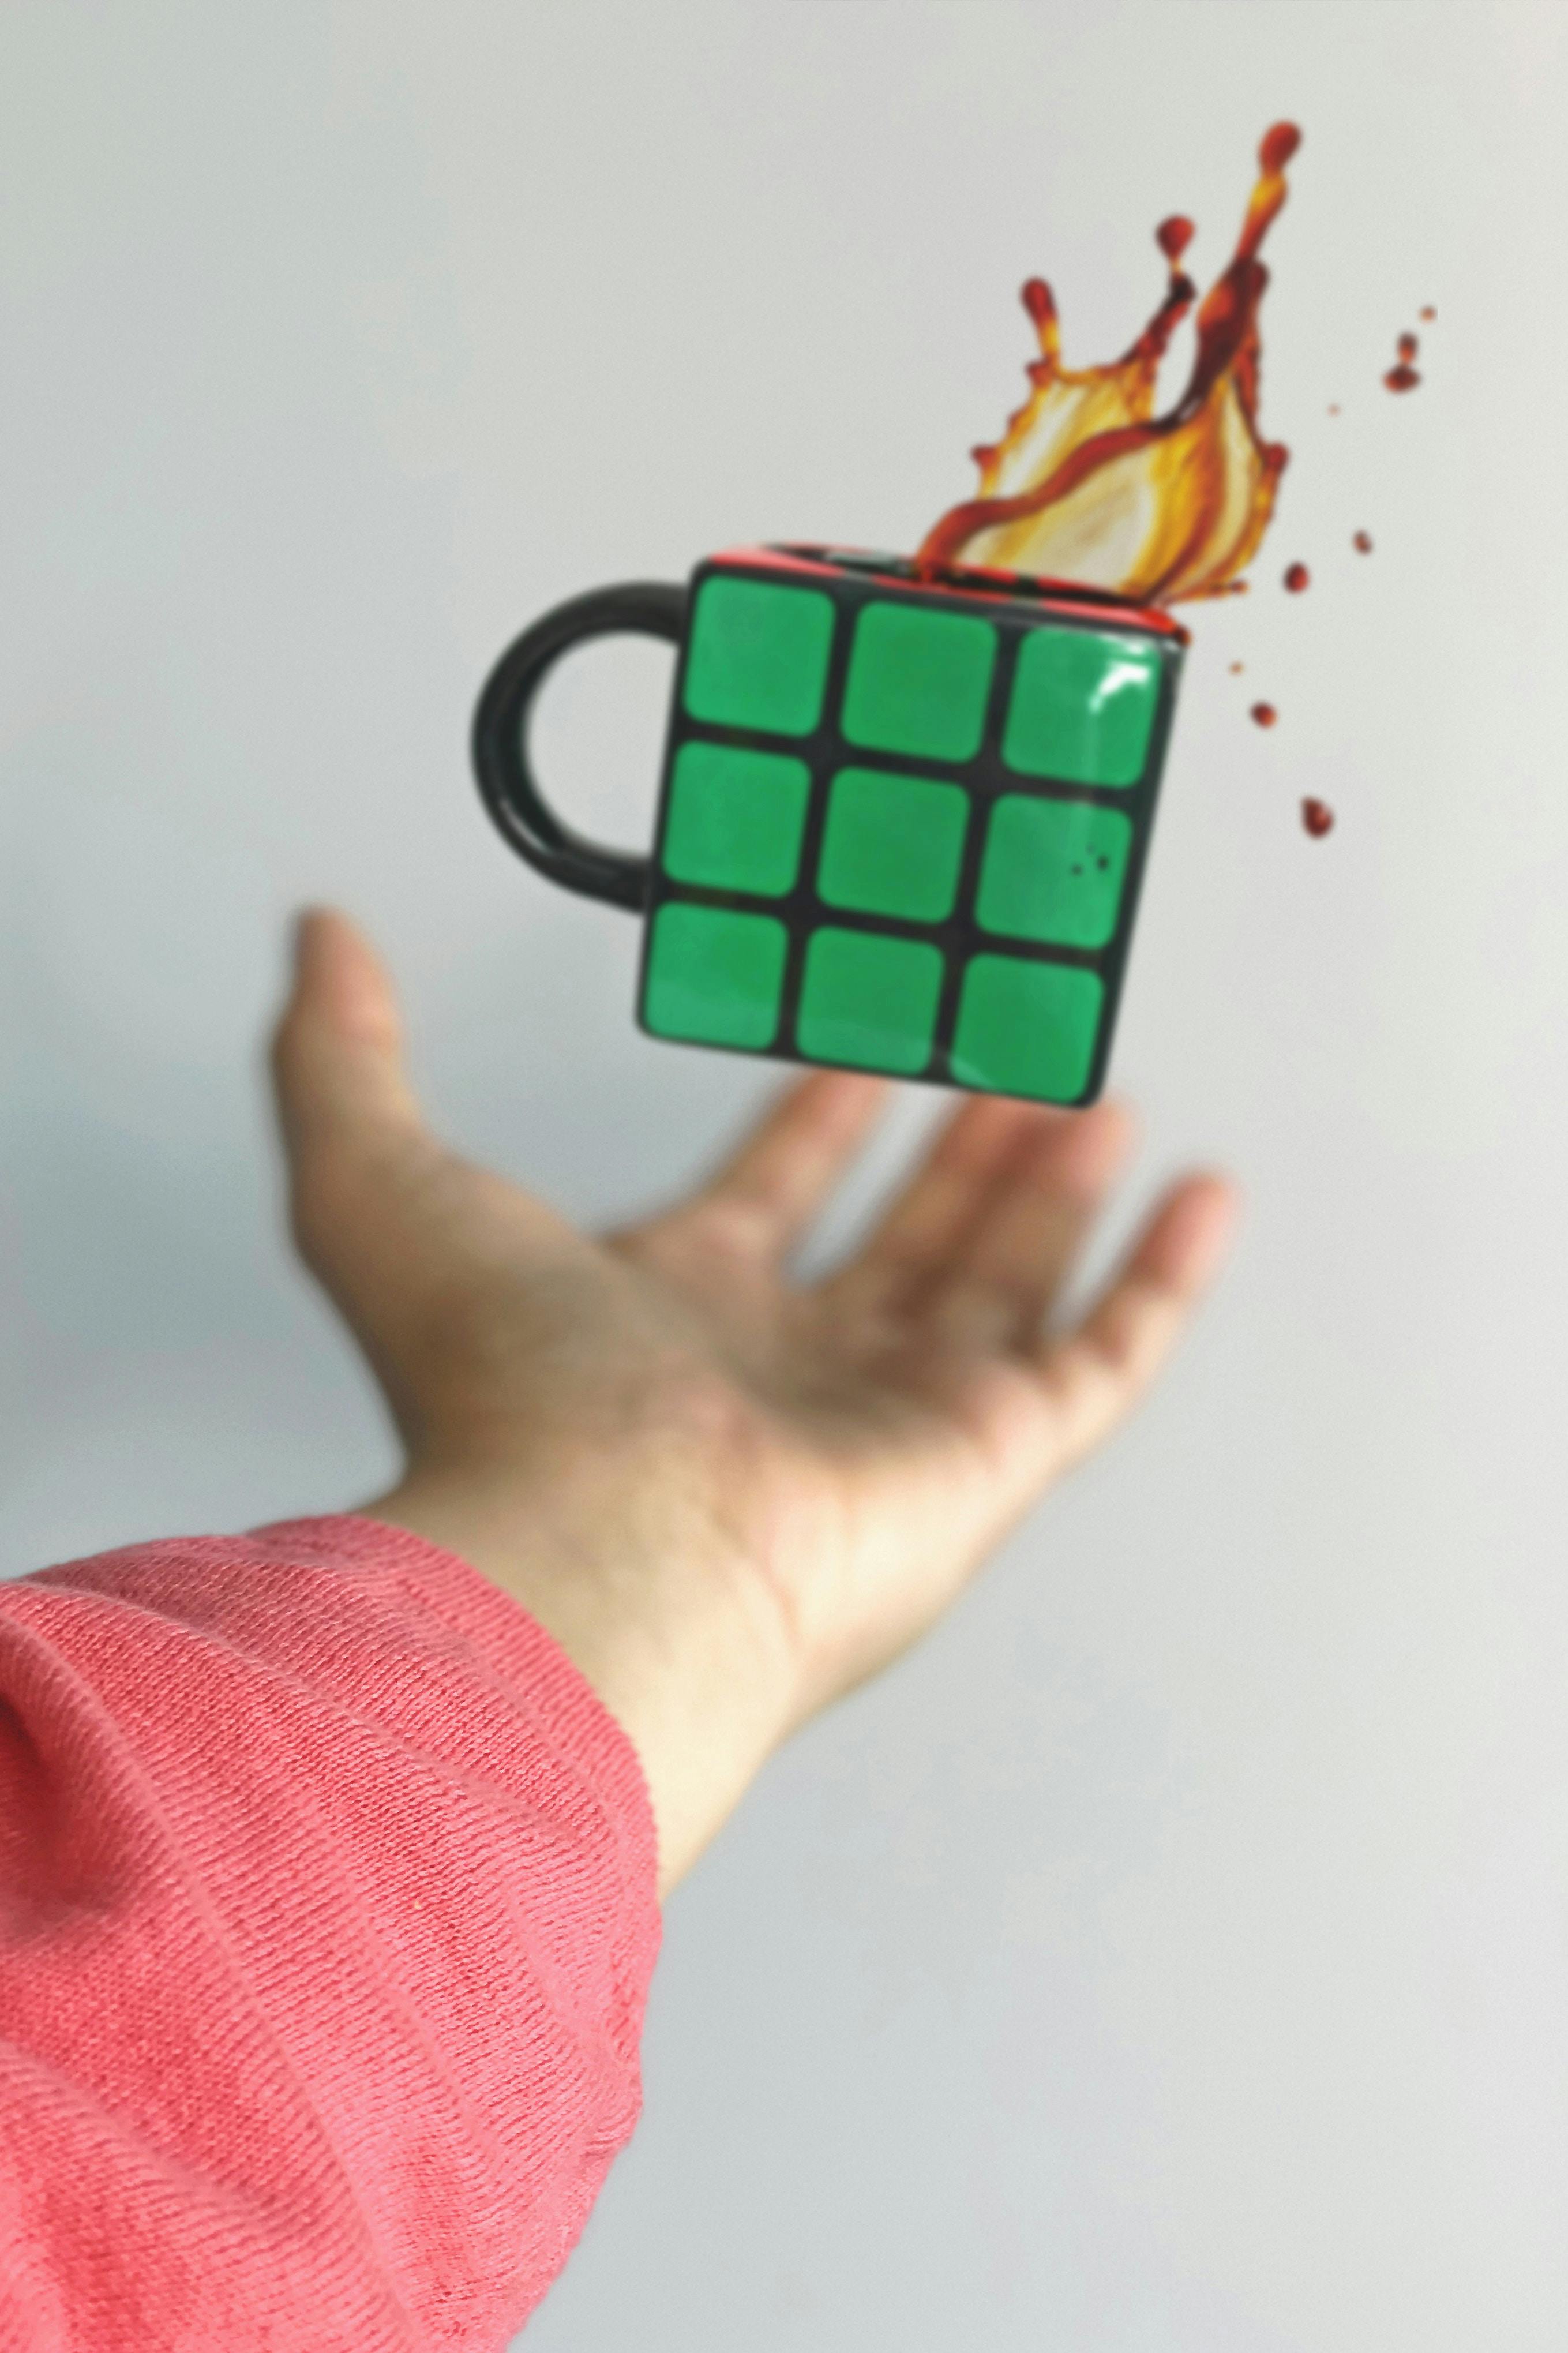 Coffee mug falling | Source: Pexels